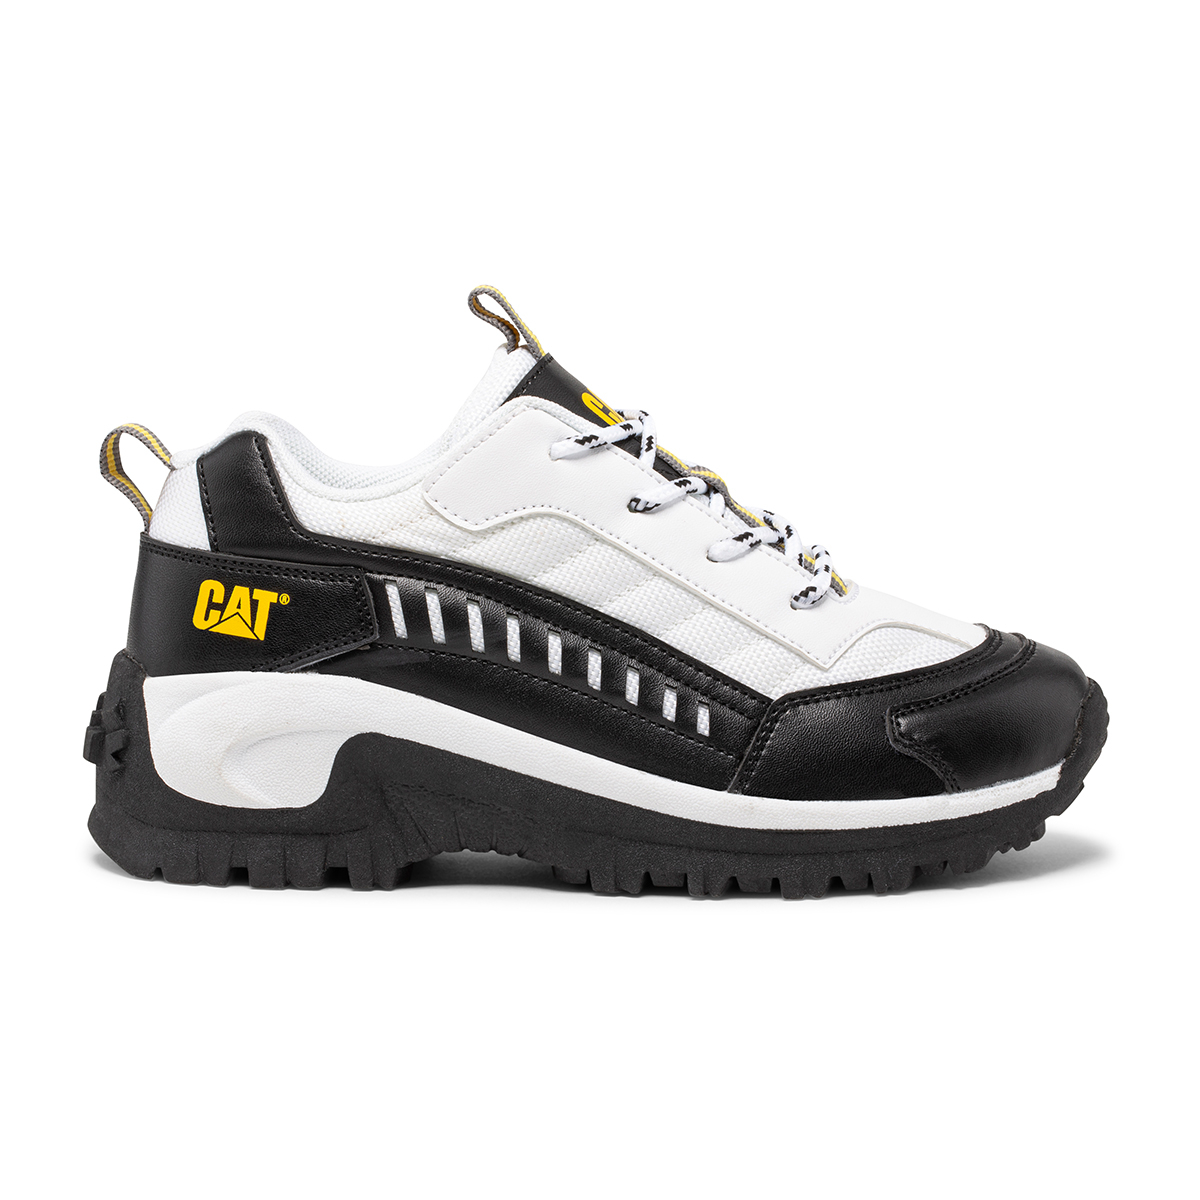 Caterpillar Shoes Online - Caterpillar Intruder Kids Sneakers White/Black (706834-SEH)